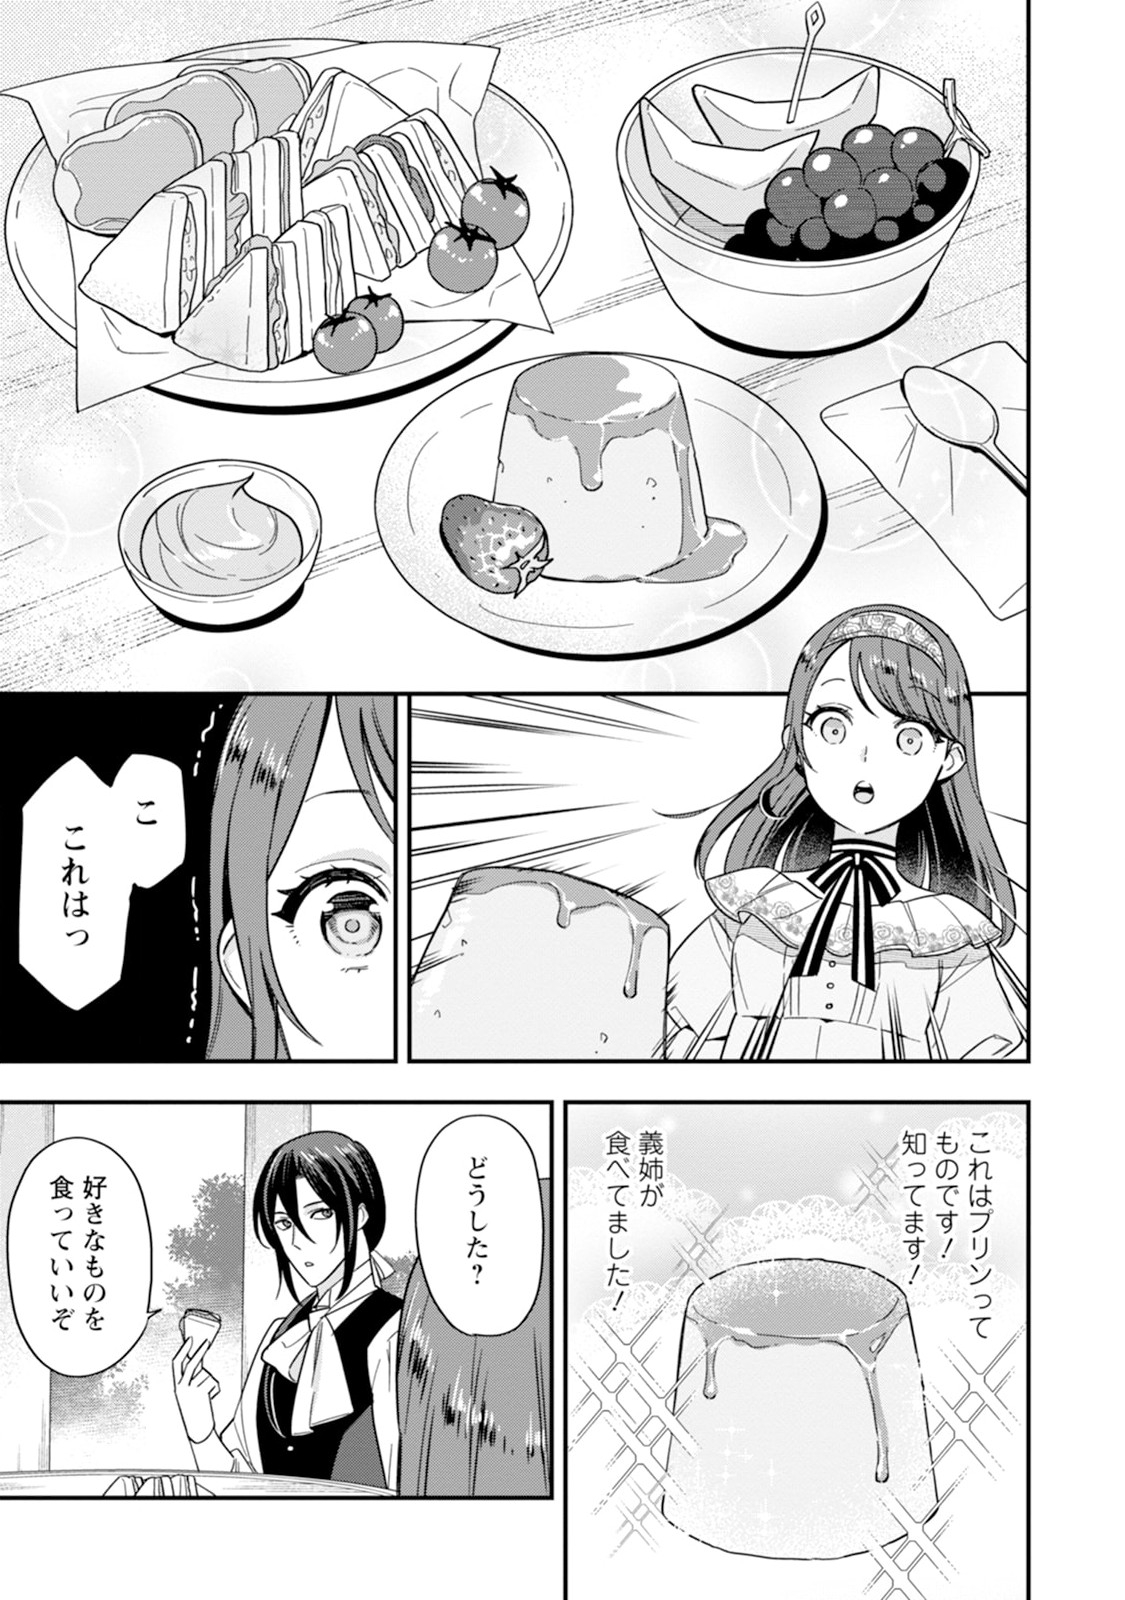 Aisanai to Iwaremashite mo - Chapter 2 - Page 3